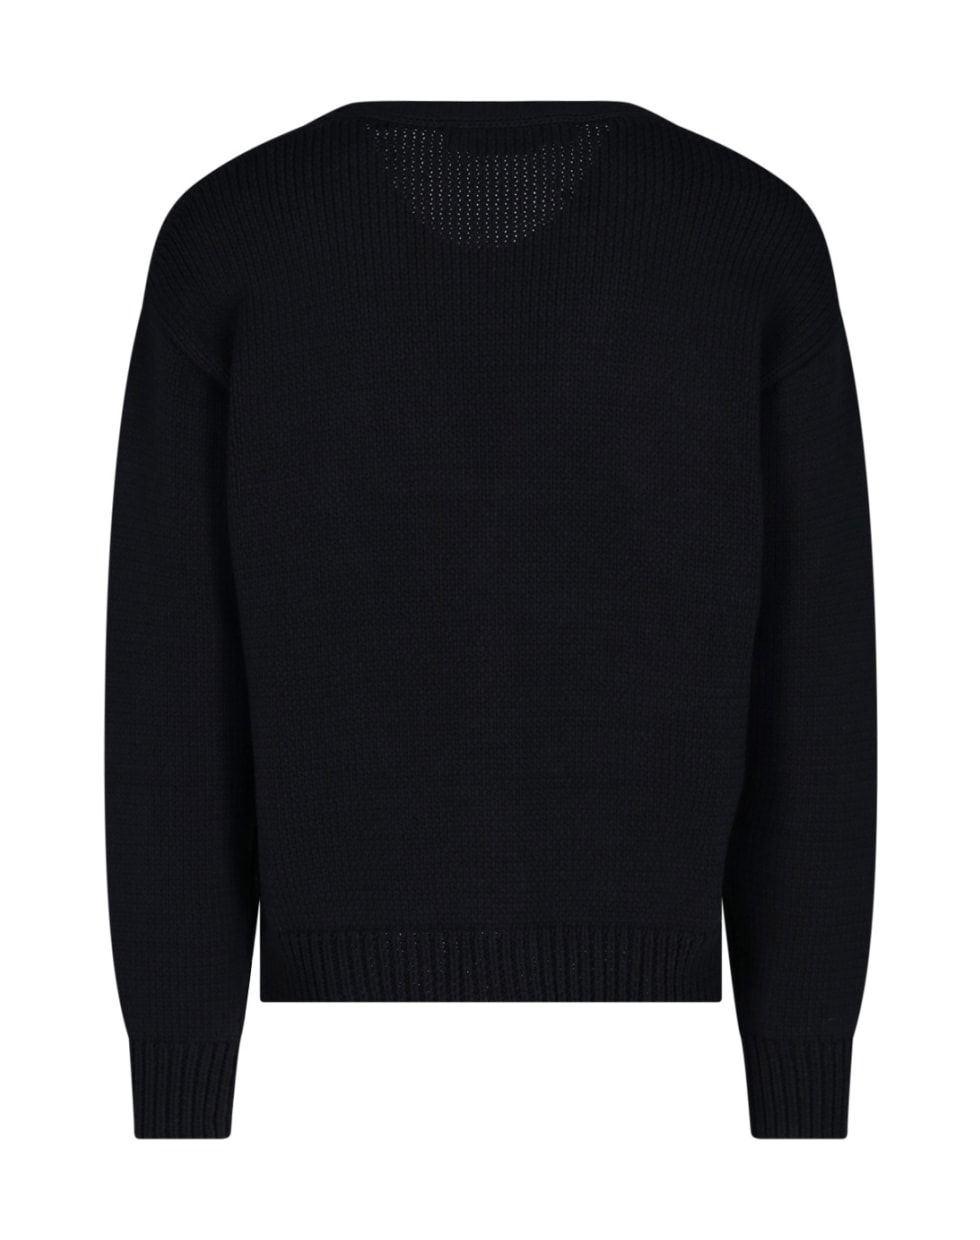 Off-White Sweater - Black